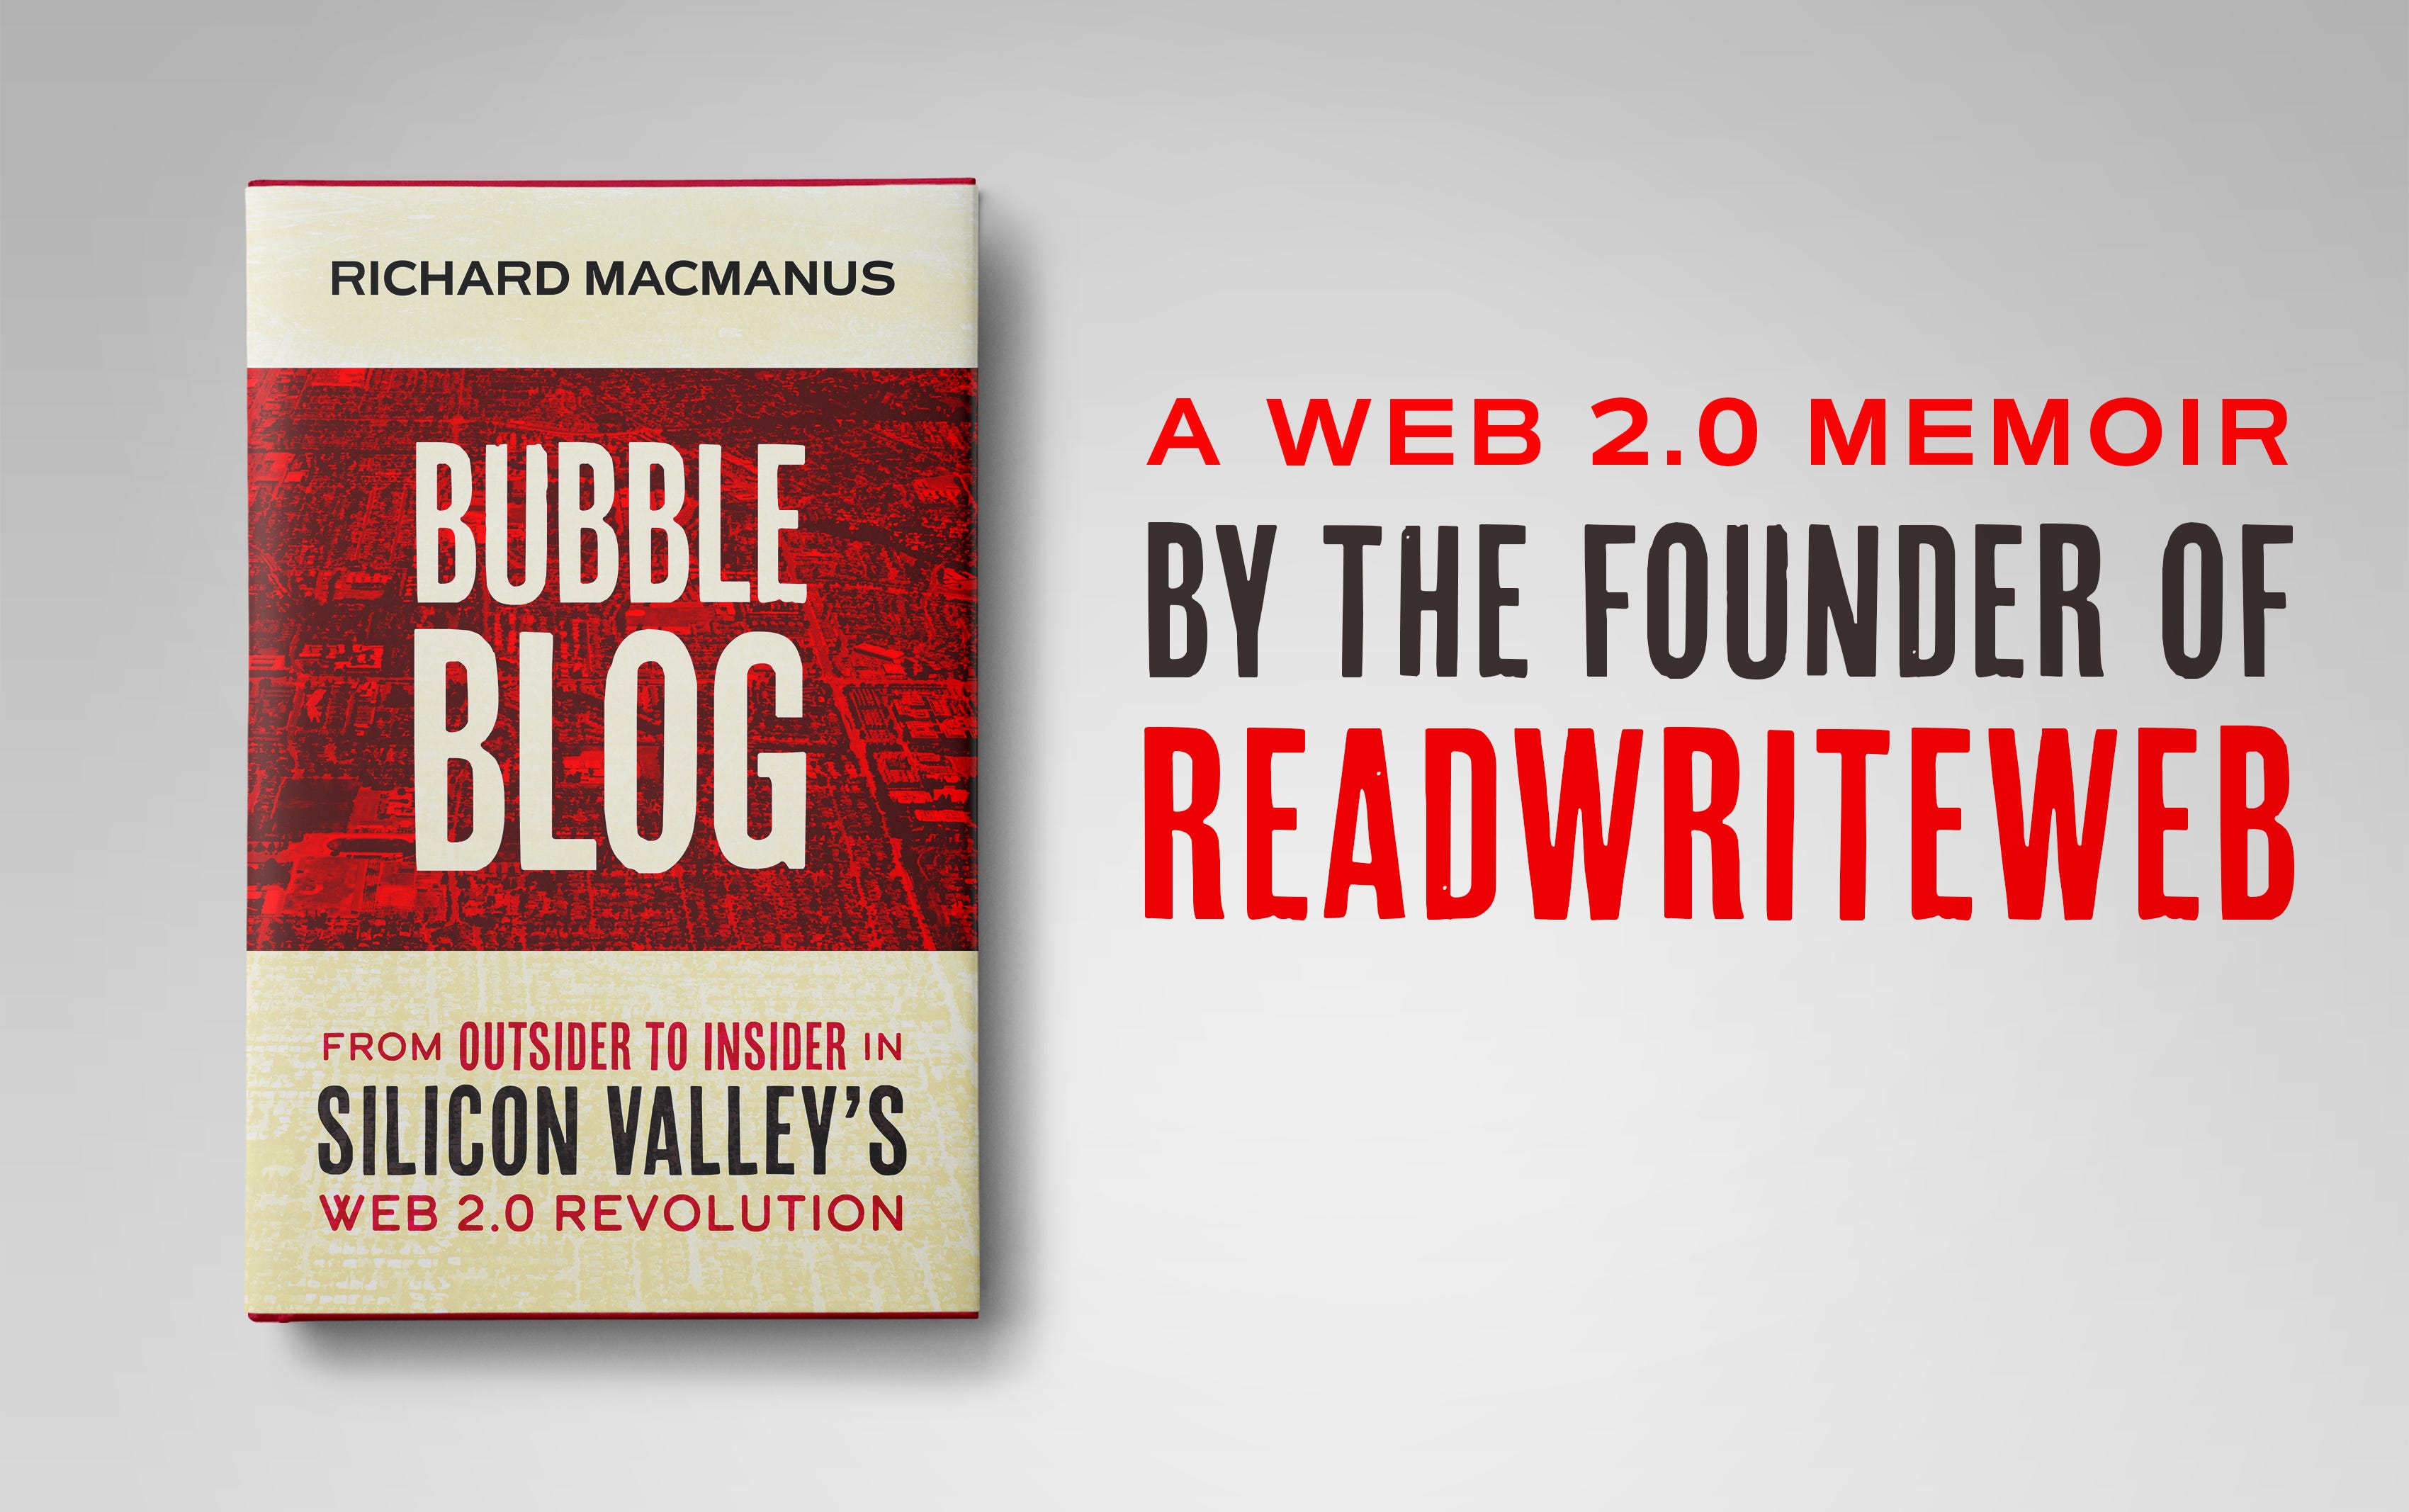 Welcome to Bubble Blog, My Web 2.0 Memoir